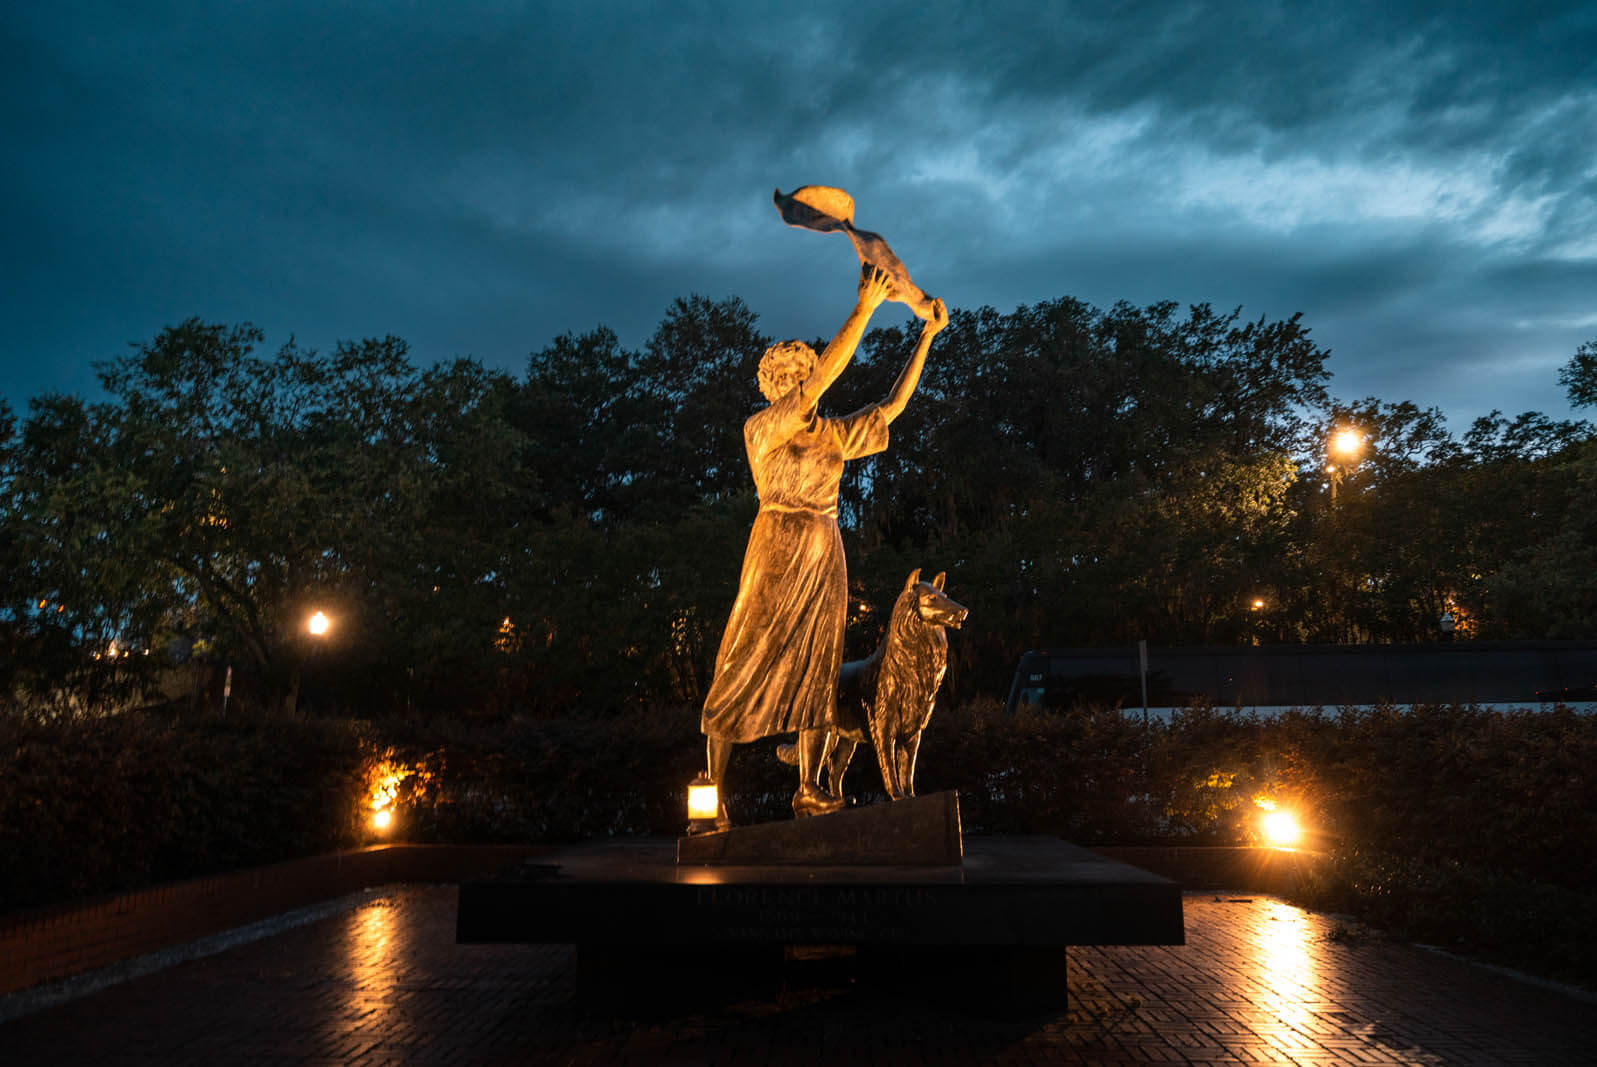 The Waving Girl Statue in Savannah Georgia